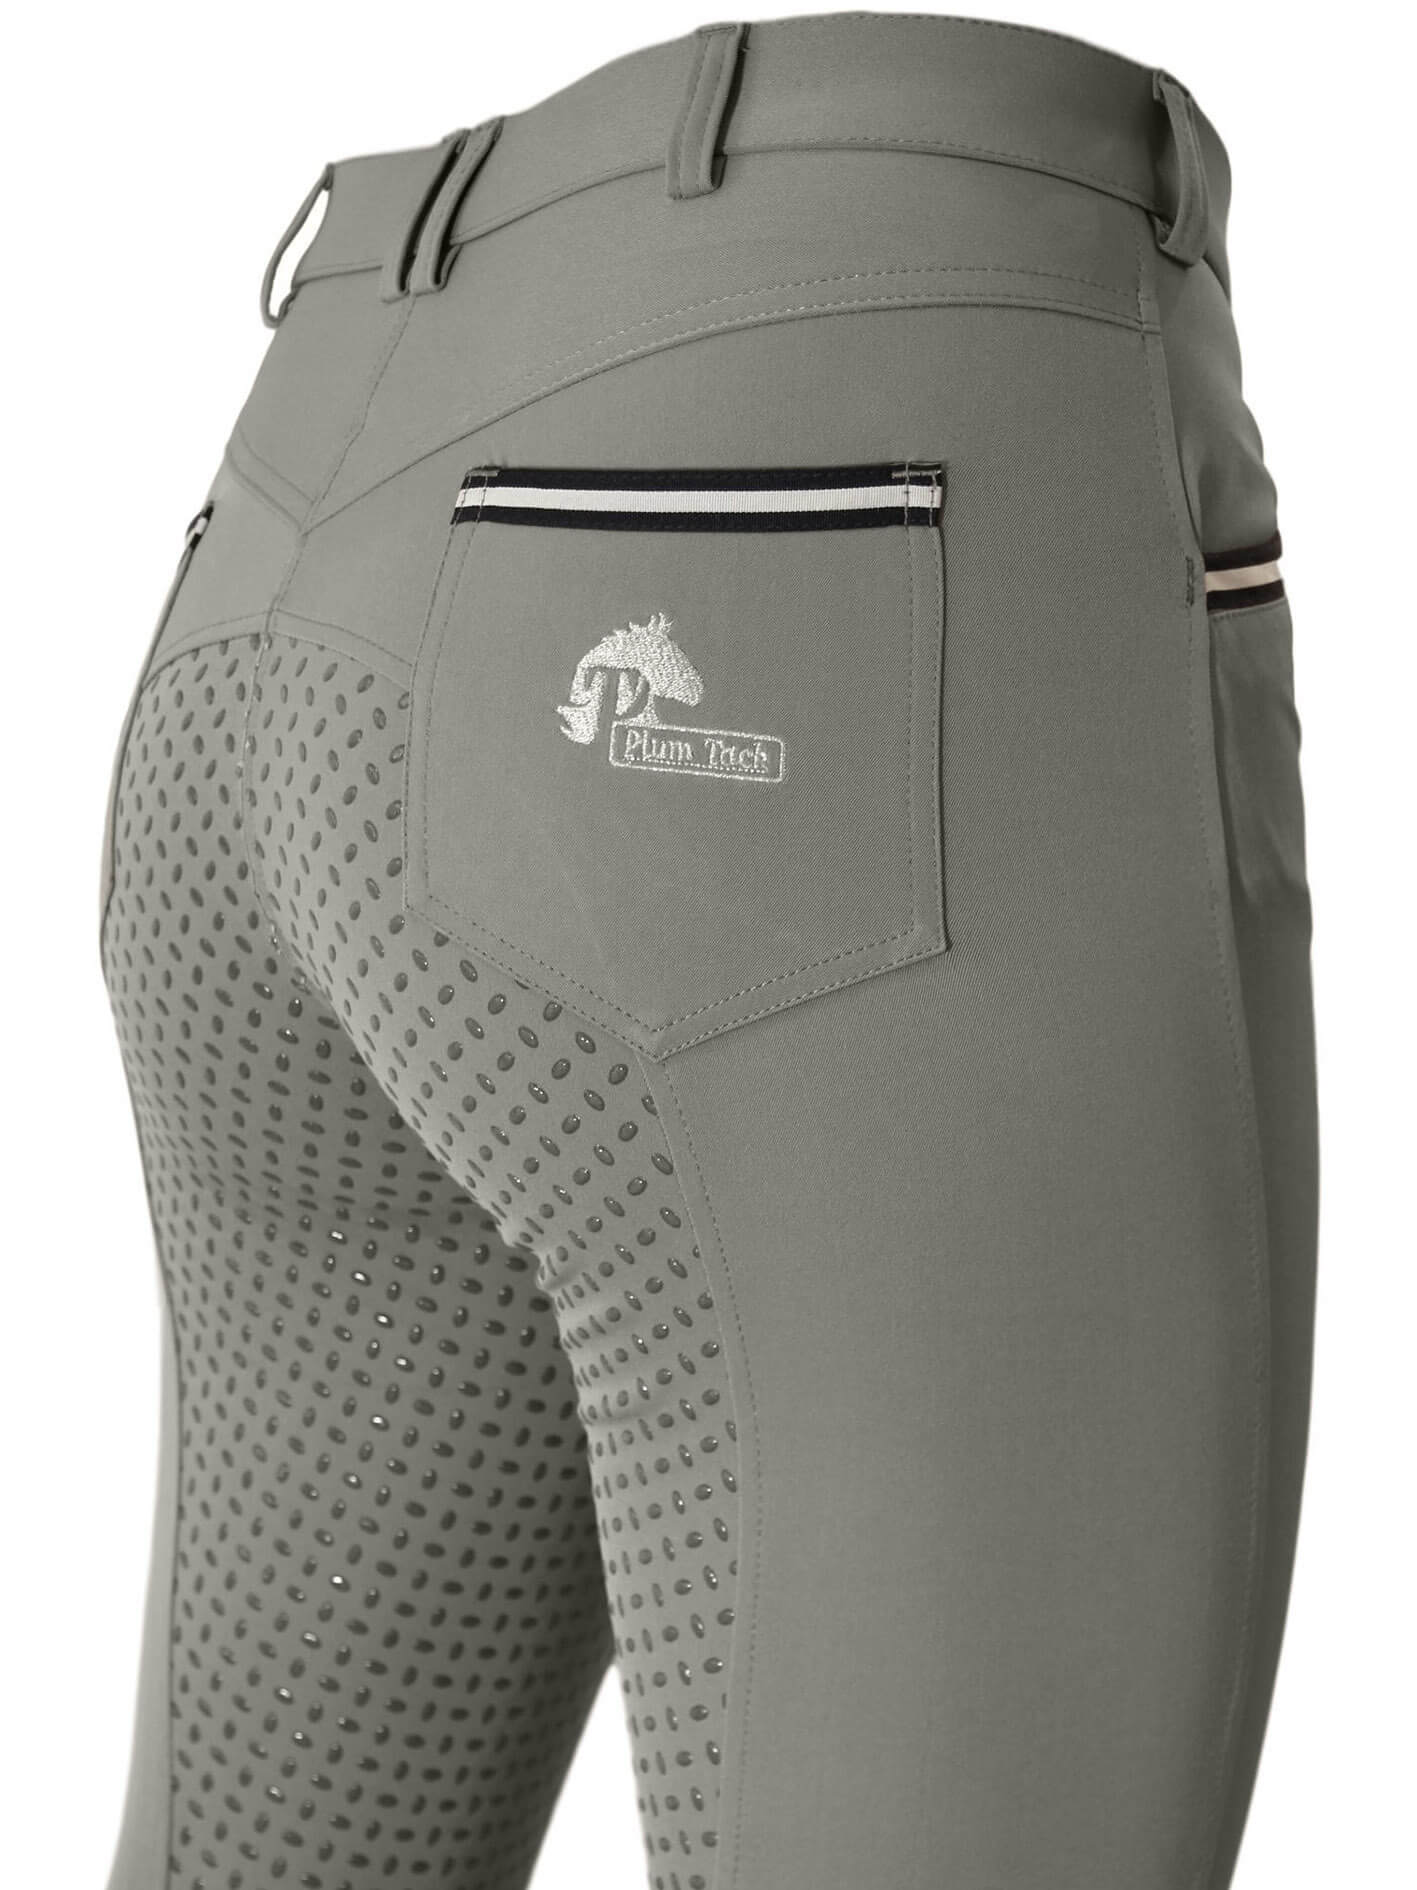 CoolMax Jodhpurs in sizes 6 to 28, in Grey